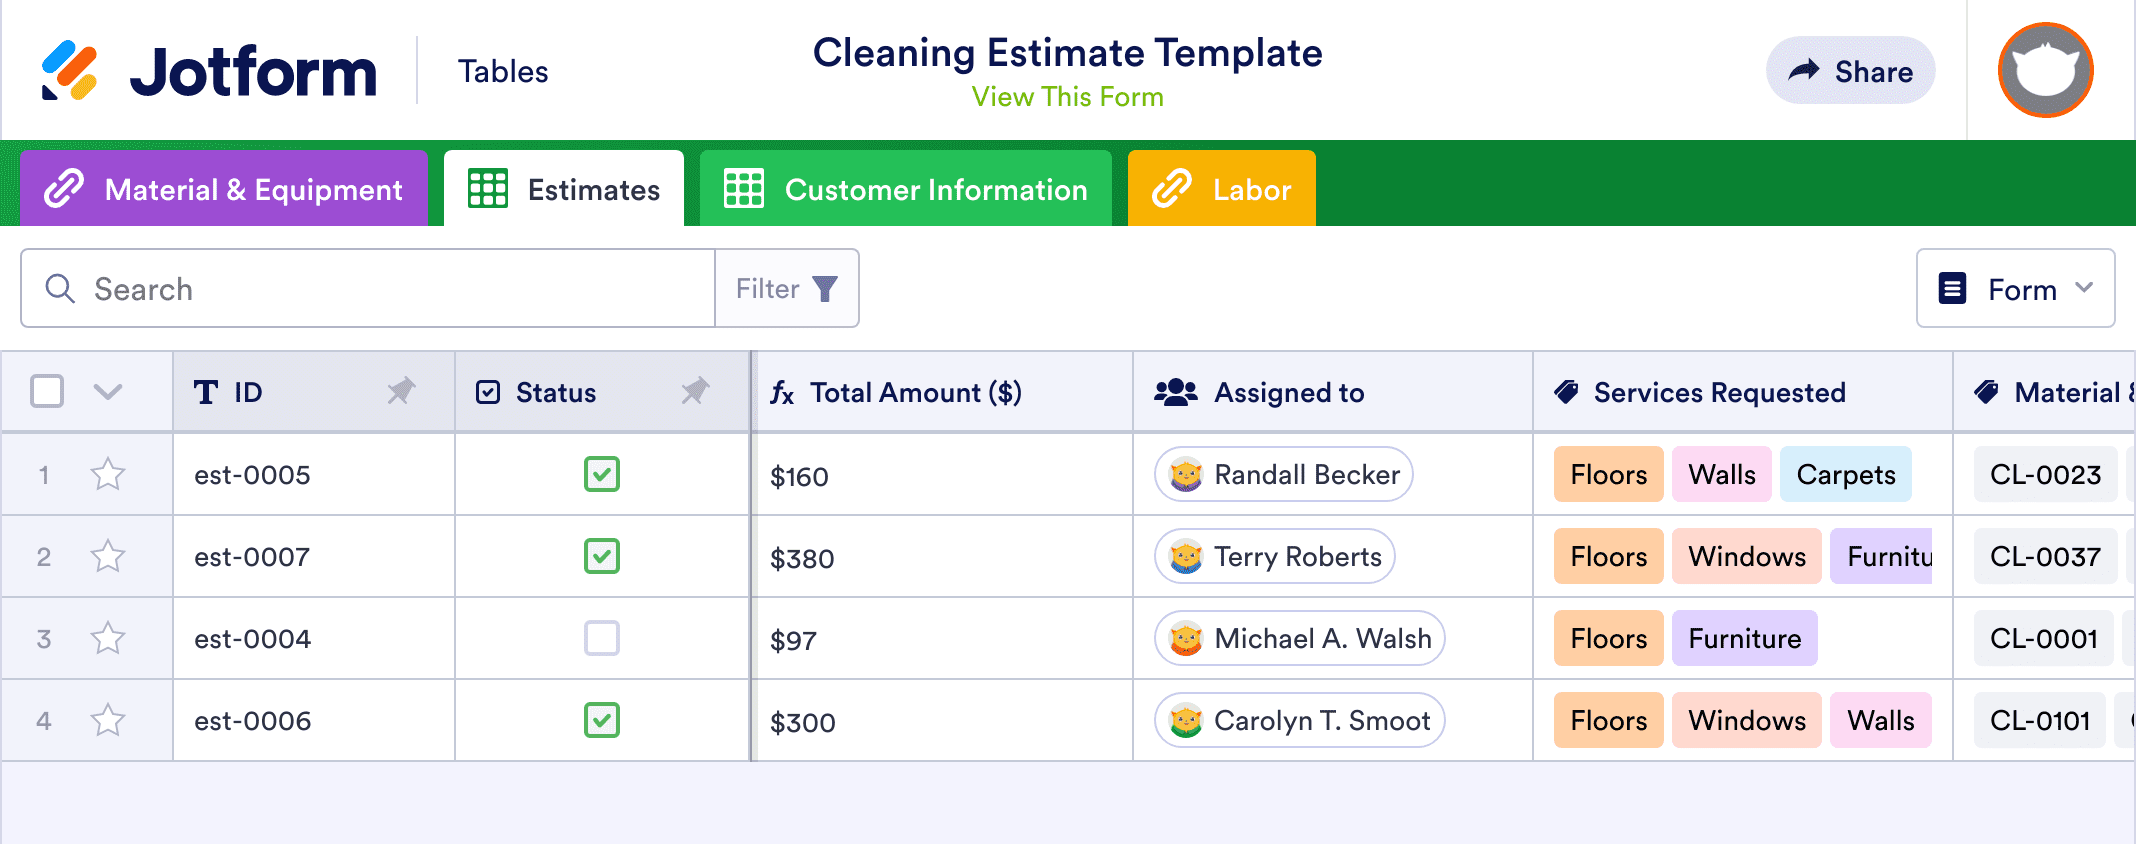 Cleaning Estimate Template | Jotform Tables